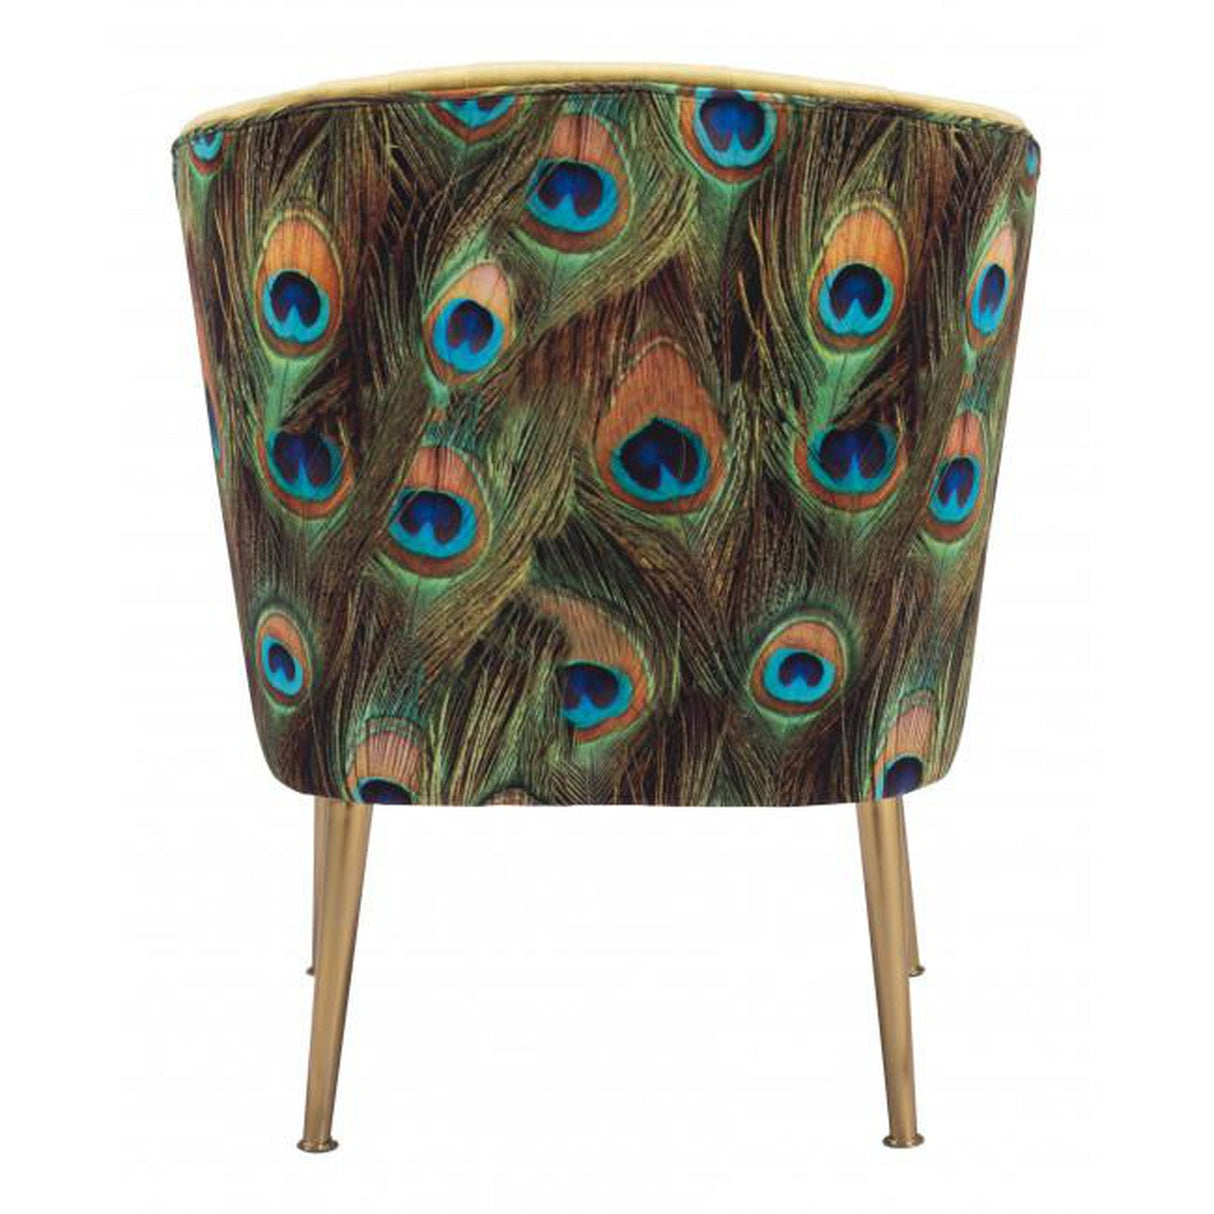 Zuo Tabitha Accent Chair Green, Gold & Peacock Print